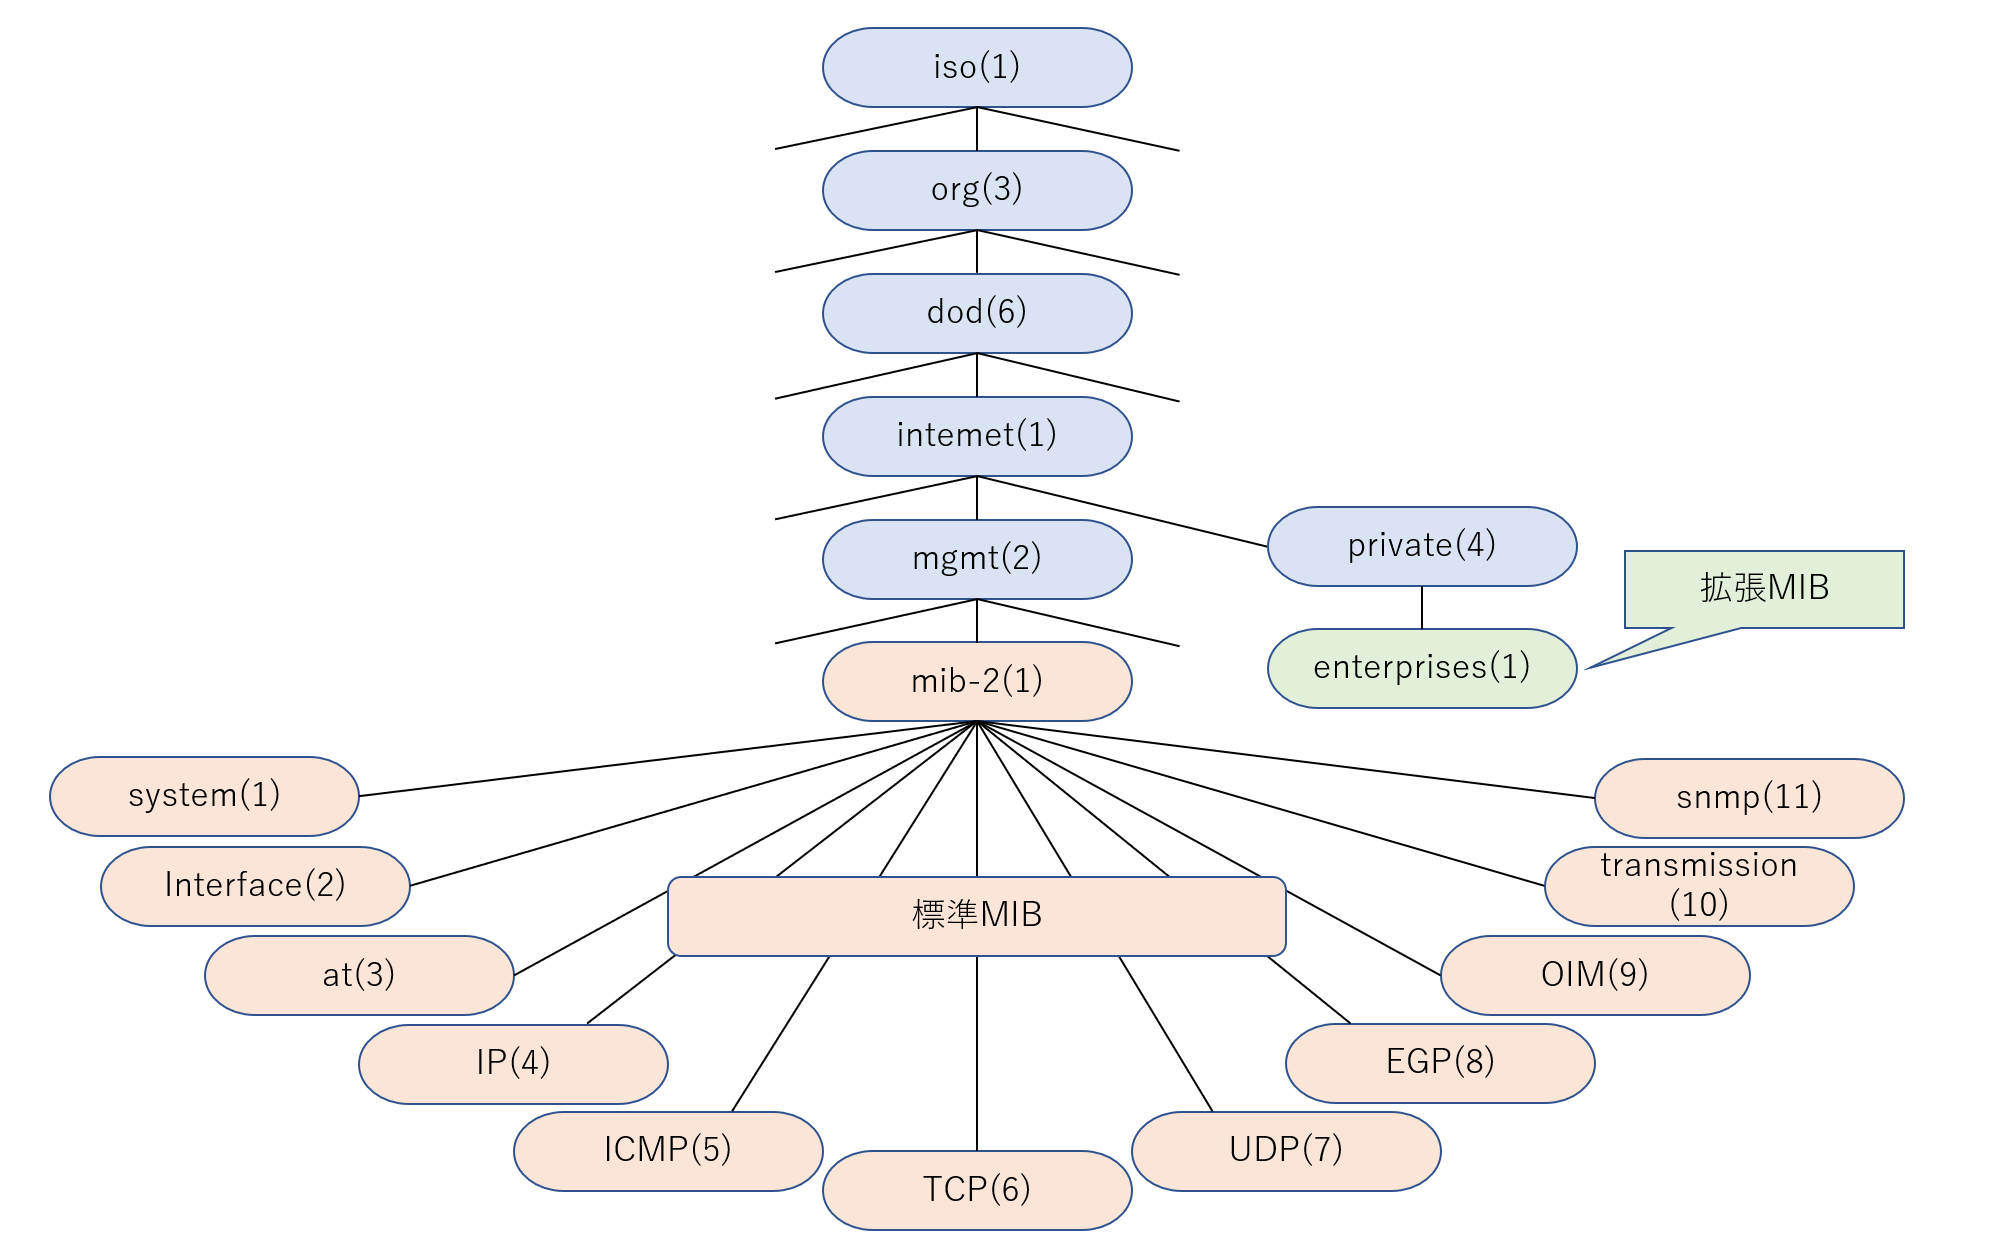 MIB tree structure diagram